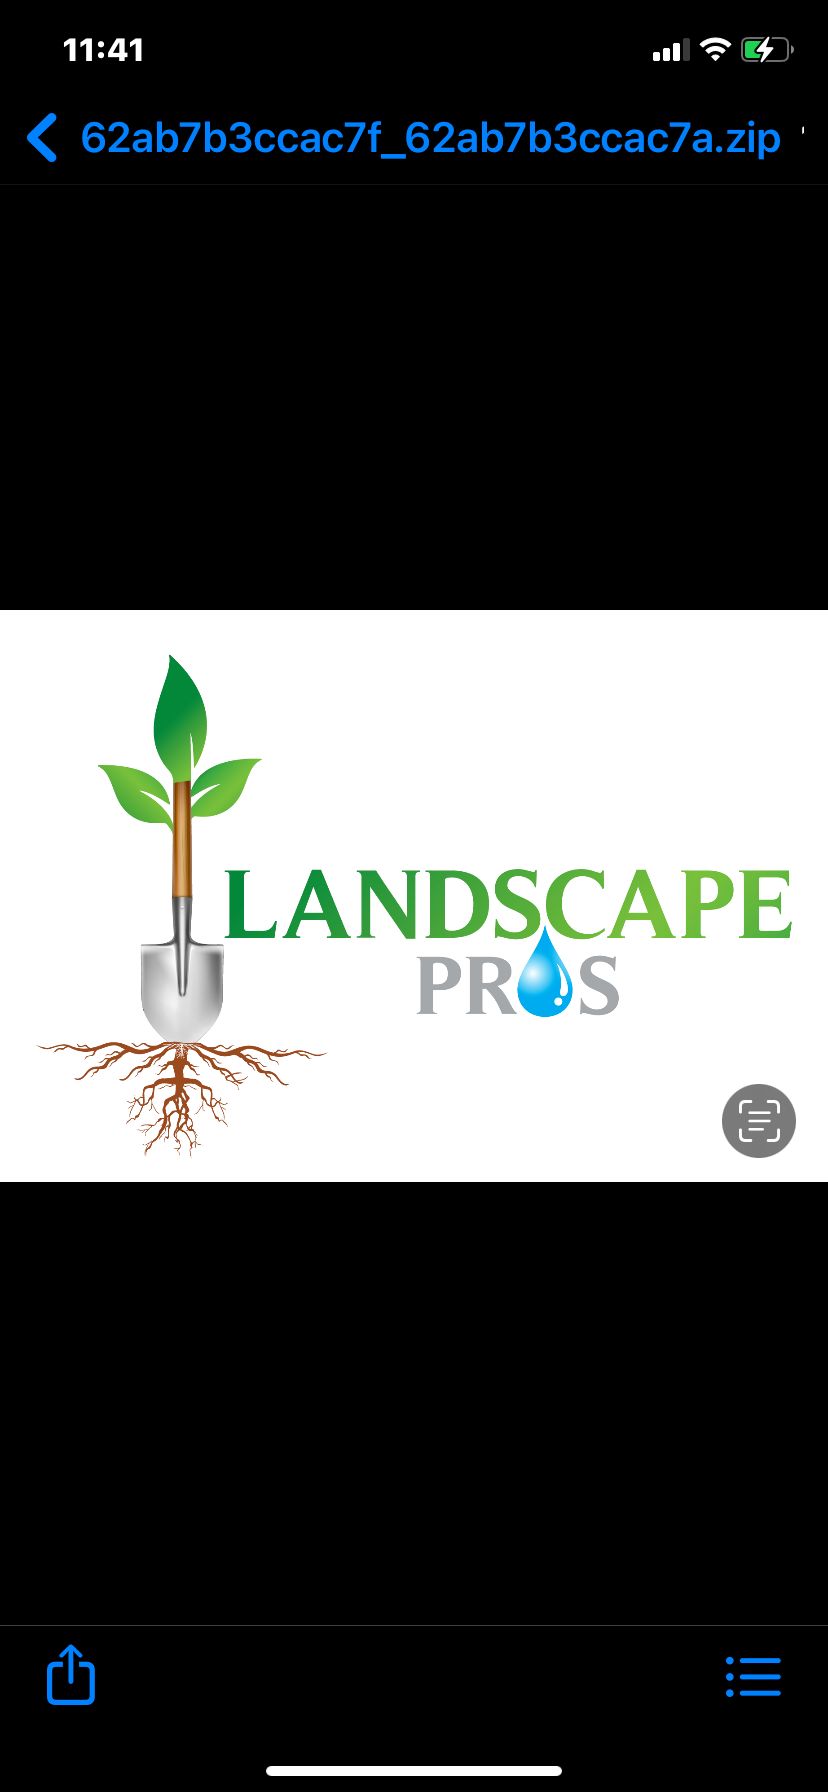 Landscape pros ca LLC.    irrigation specialist